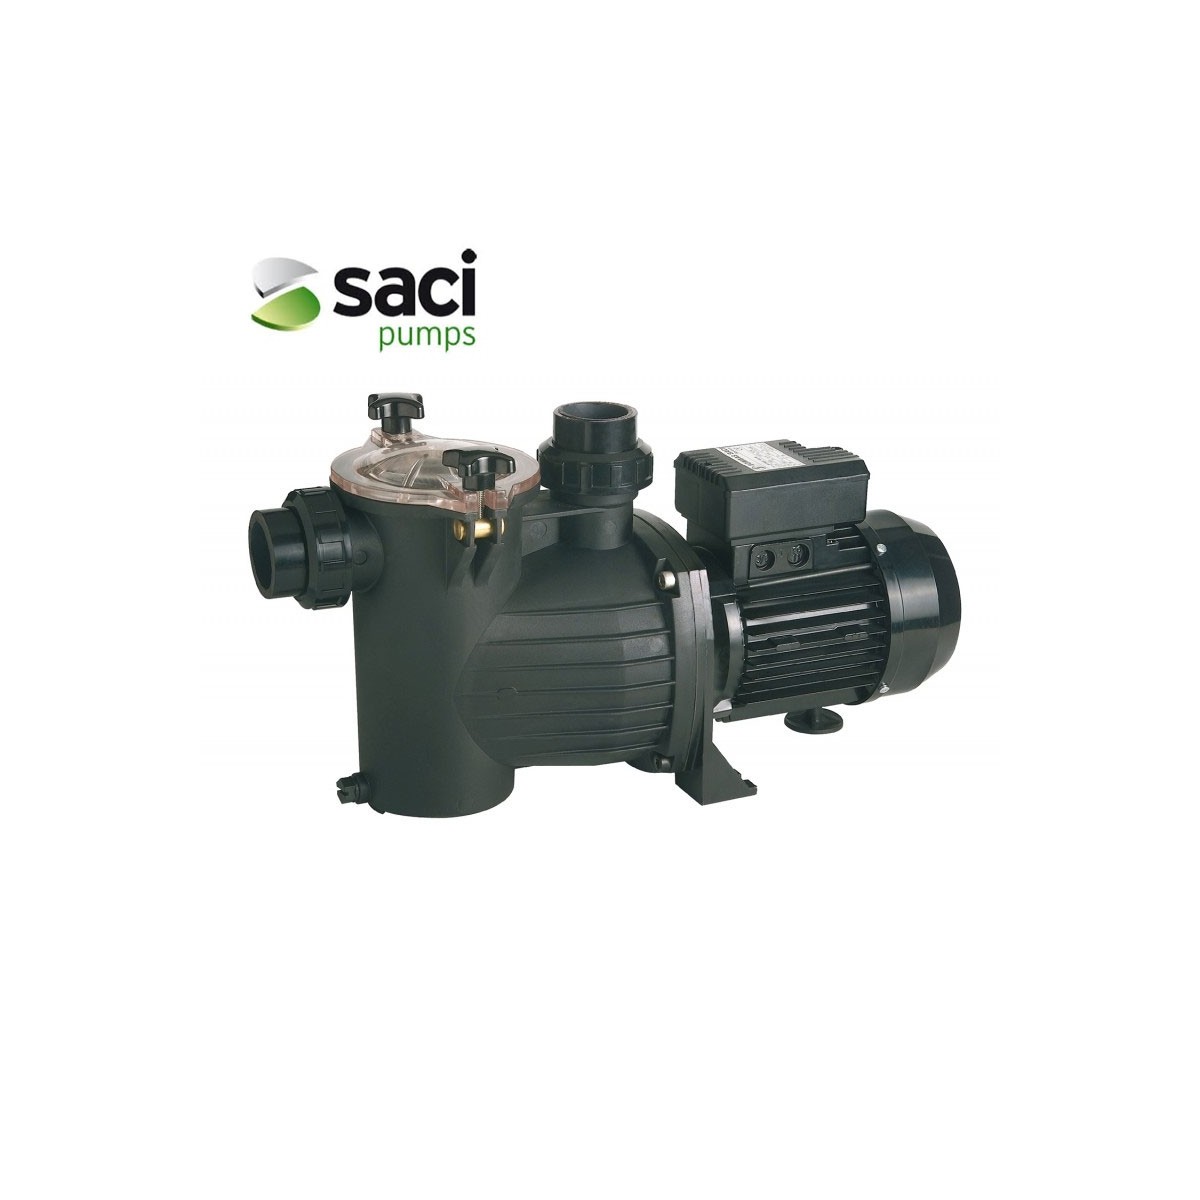 Optima Saci pump - kw 033 - Load 10 m3/h at 8 mwc single speed